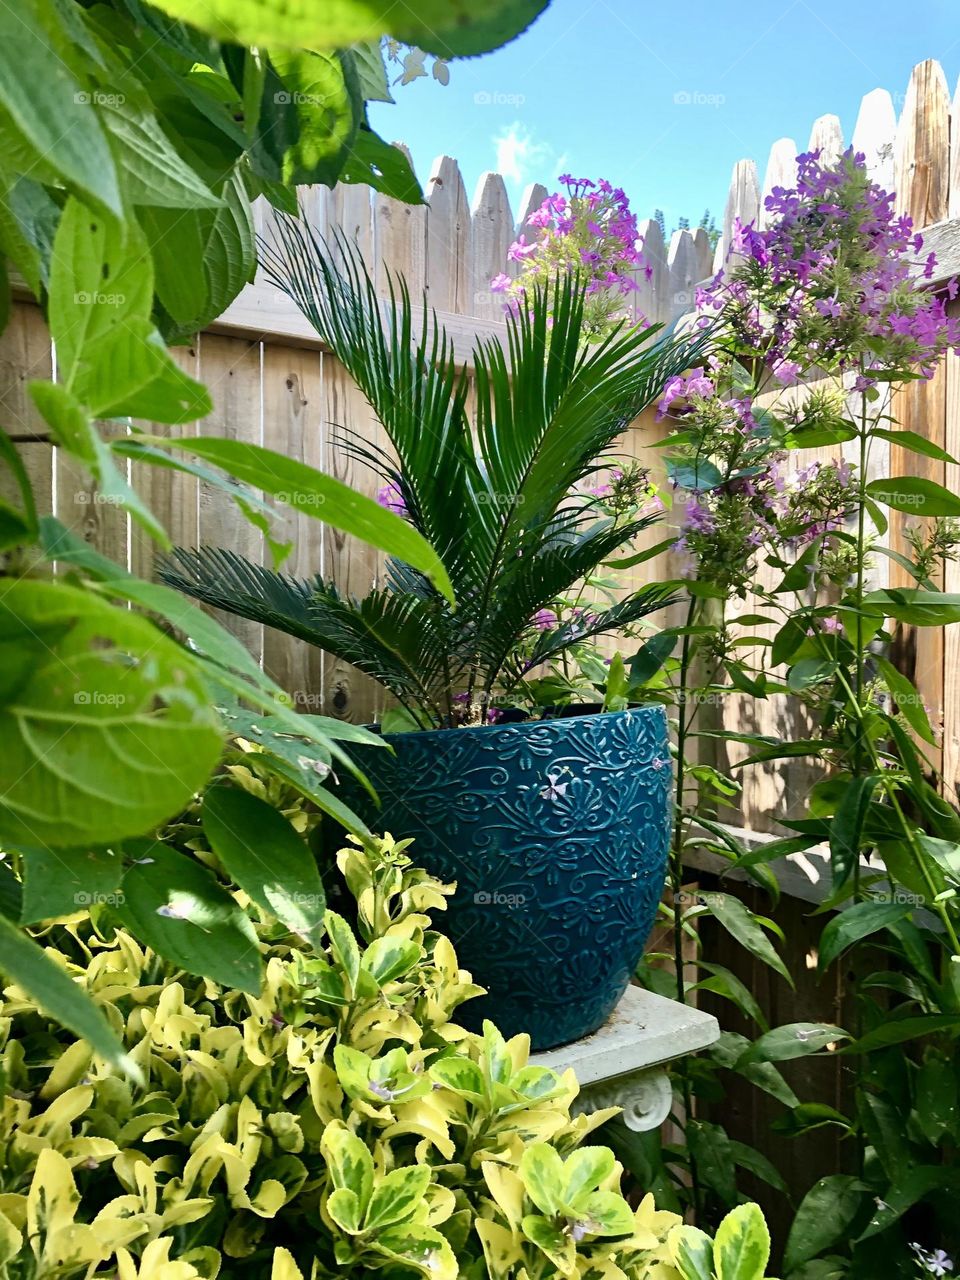 Palm tree in the pot / back yard garden 🪴